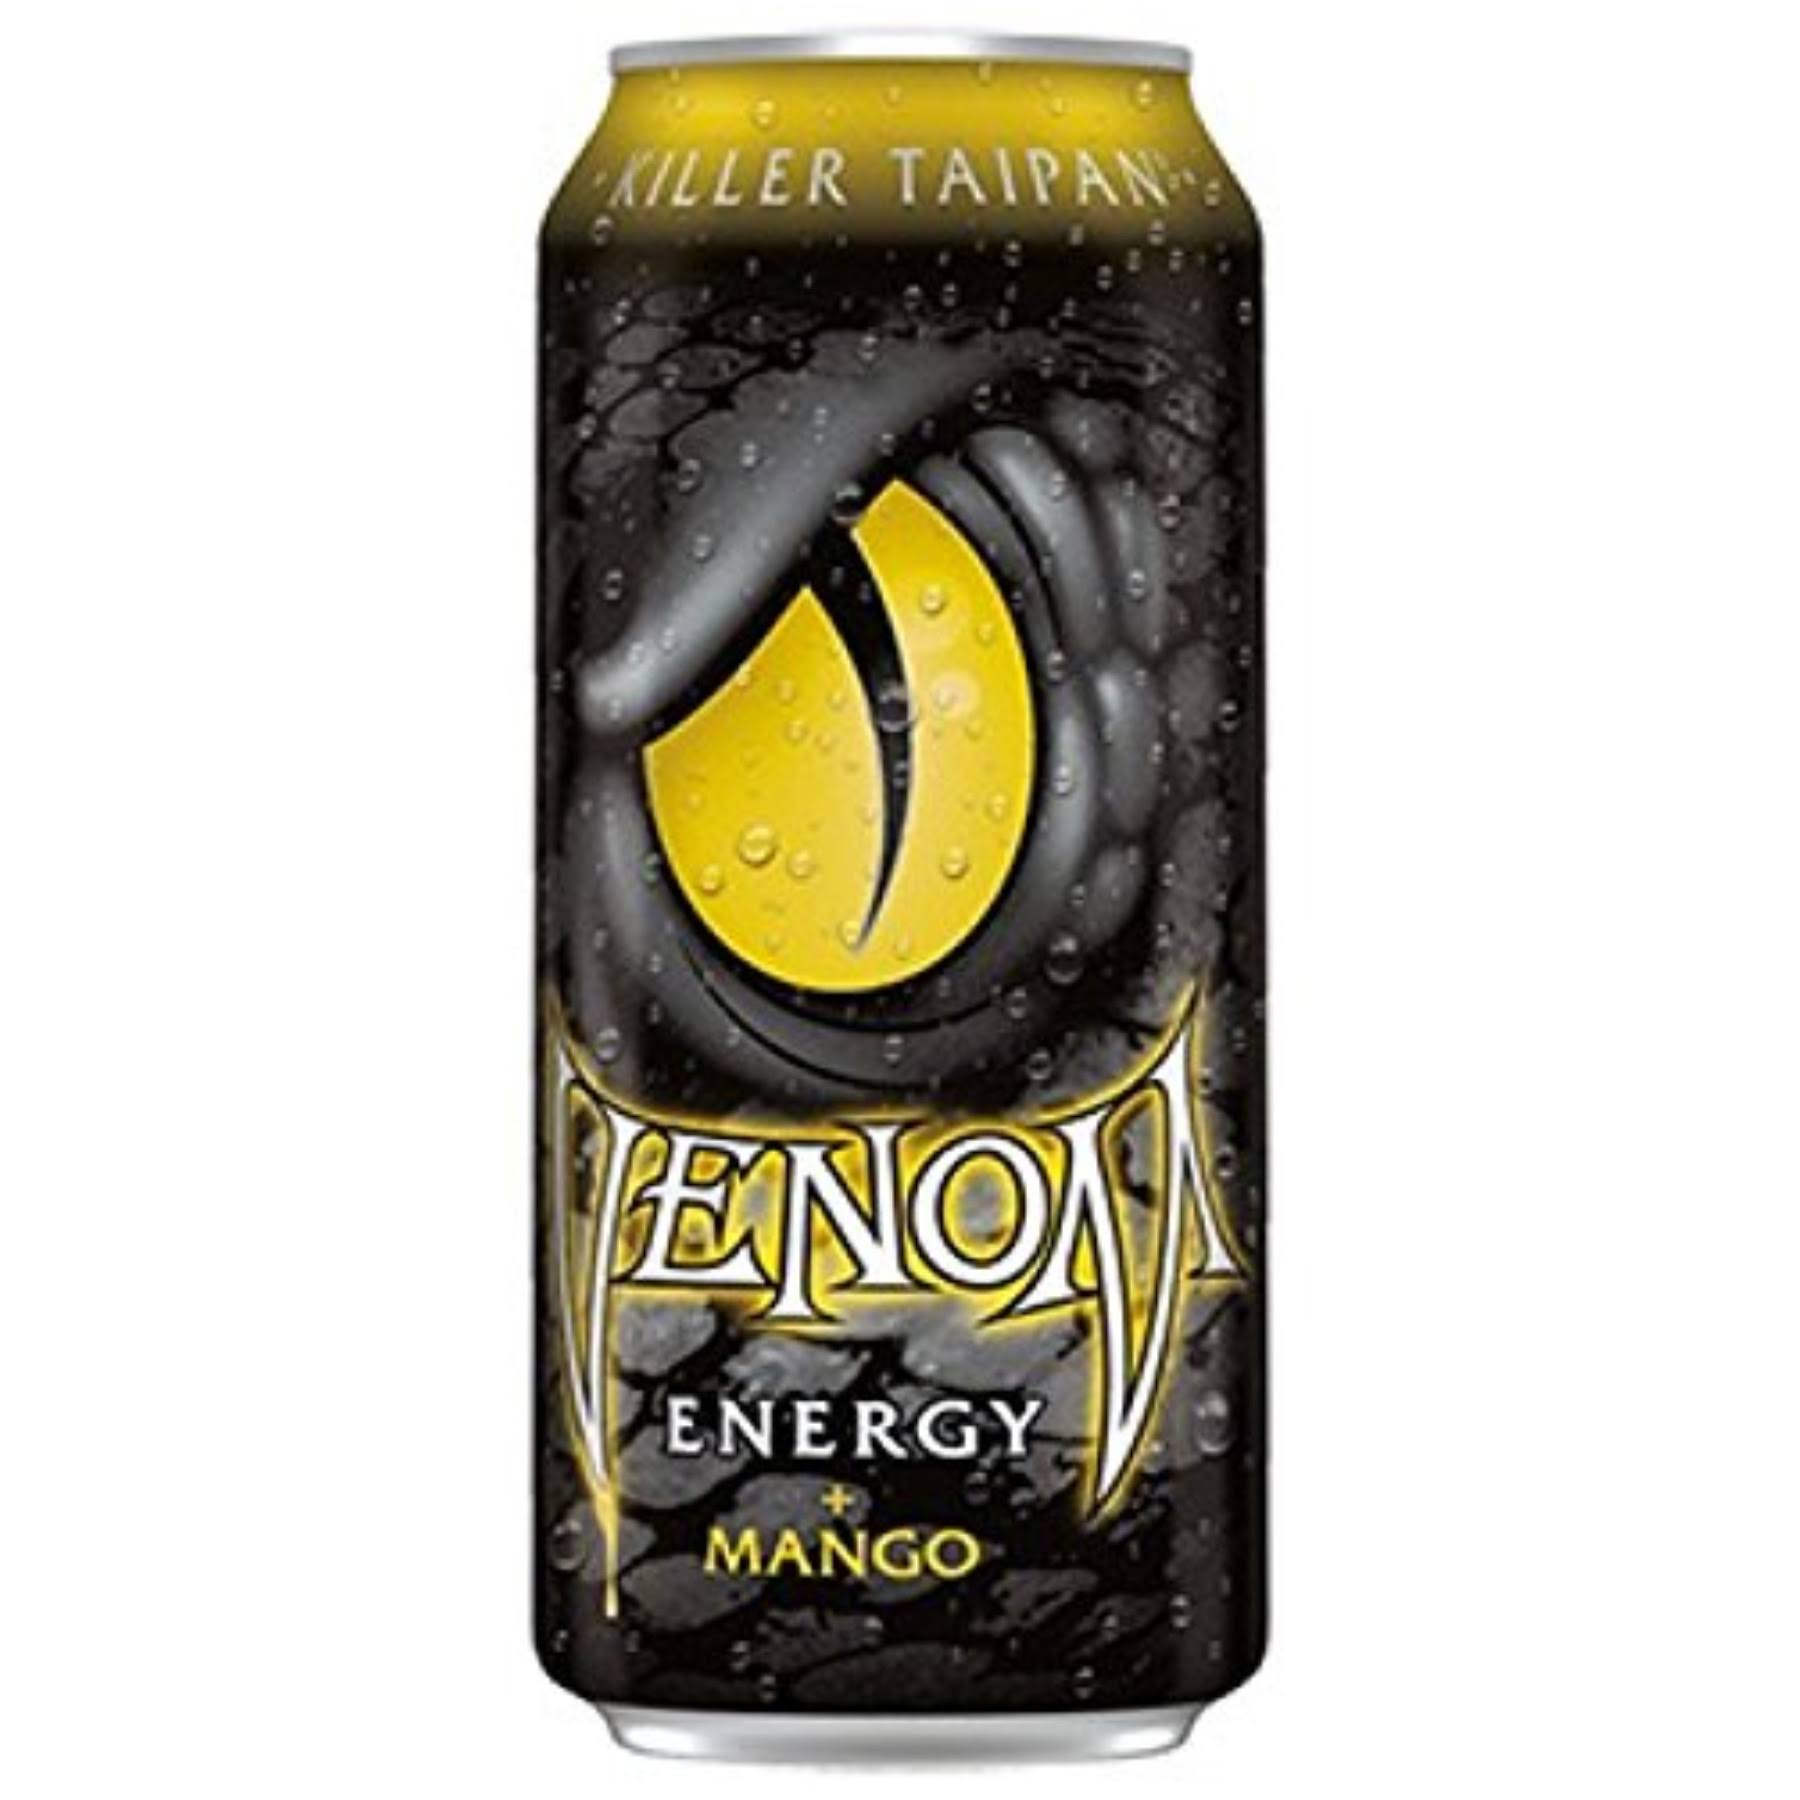 Venom Energy Drink, Killer Taipan, Mango Flavored - 16 fl oz